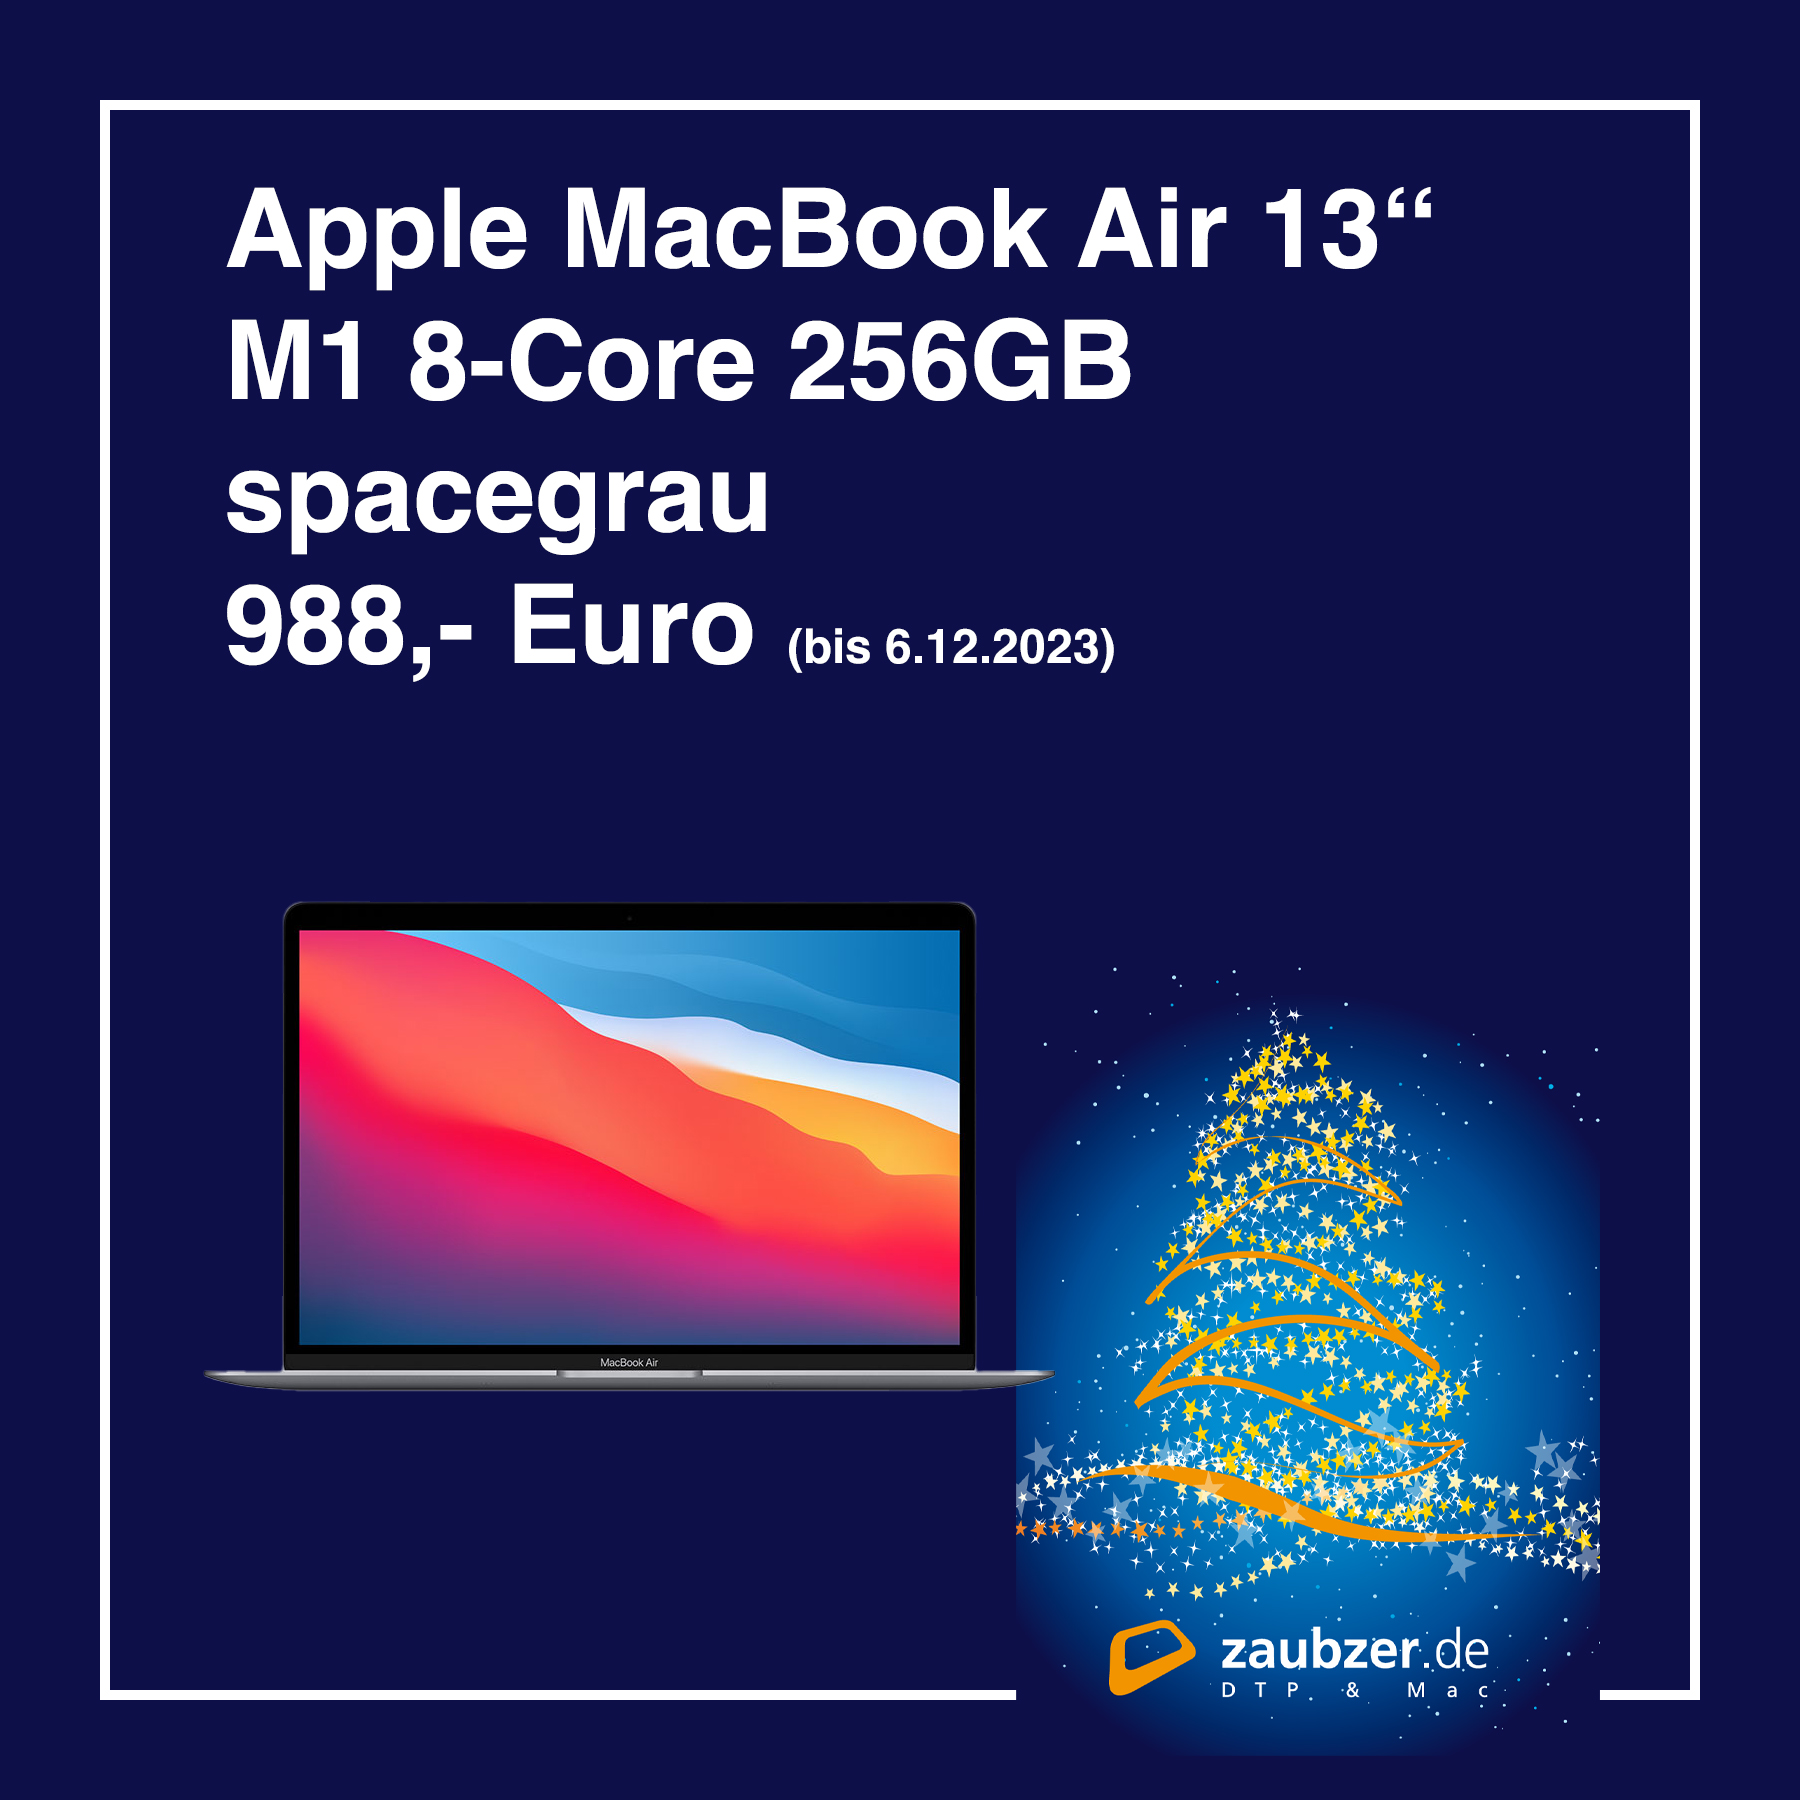 Apple MacBook Air M1 - Weihnachtsaktion - zaubzer.de Mannheim